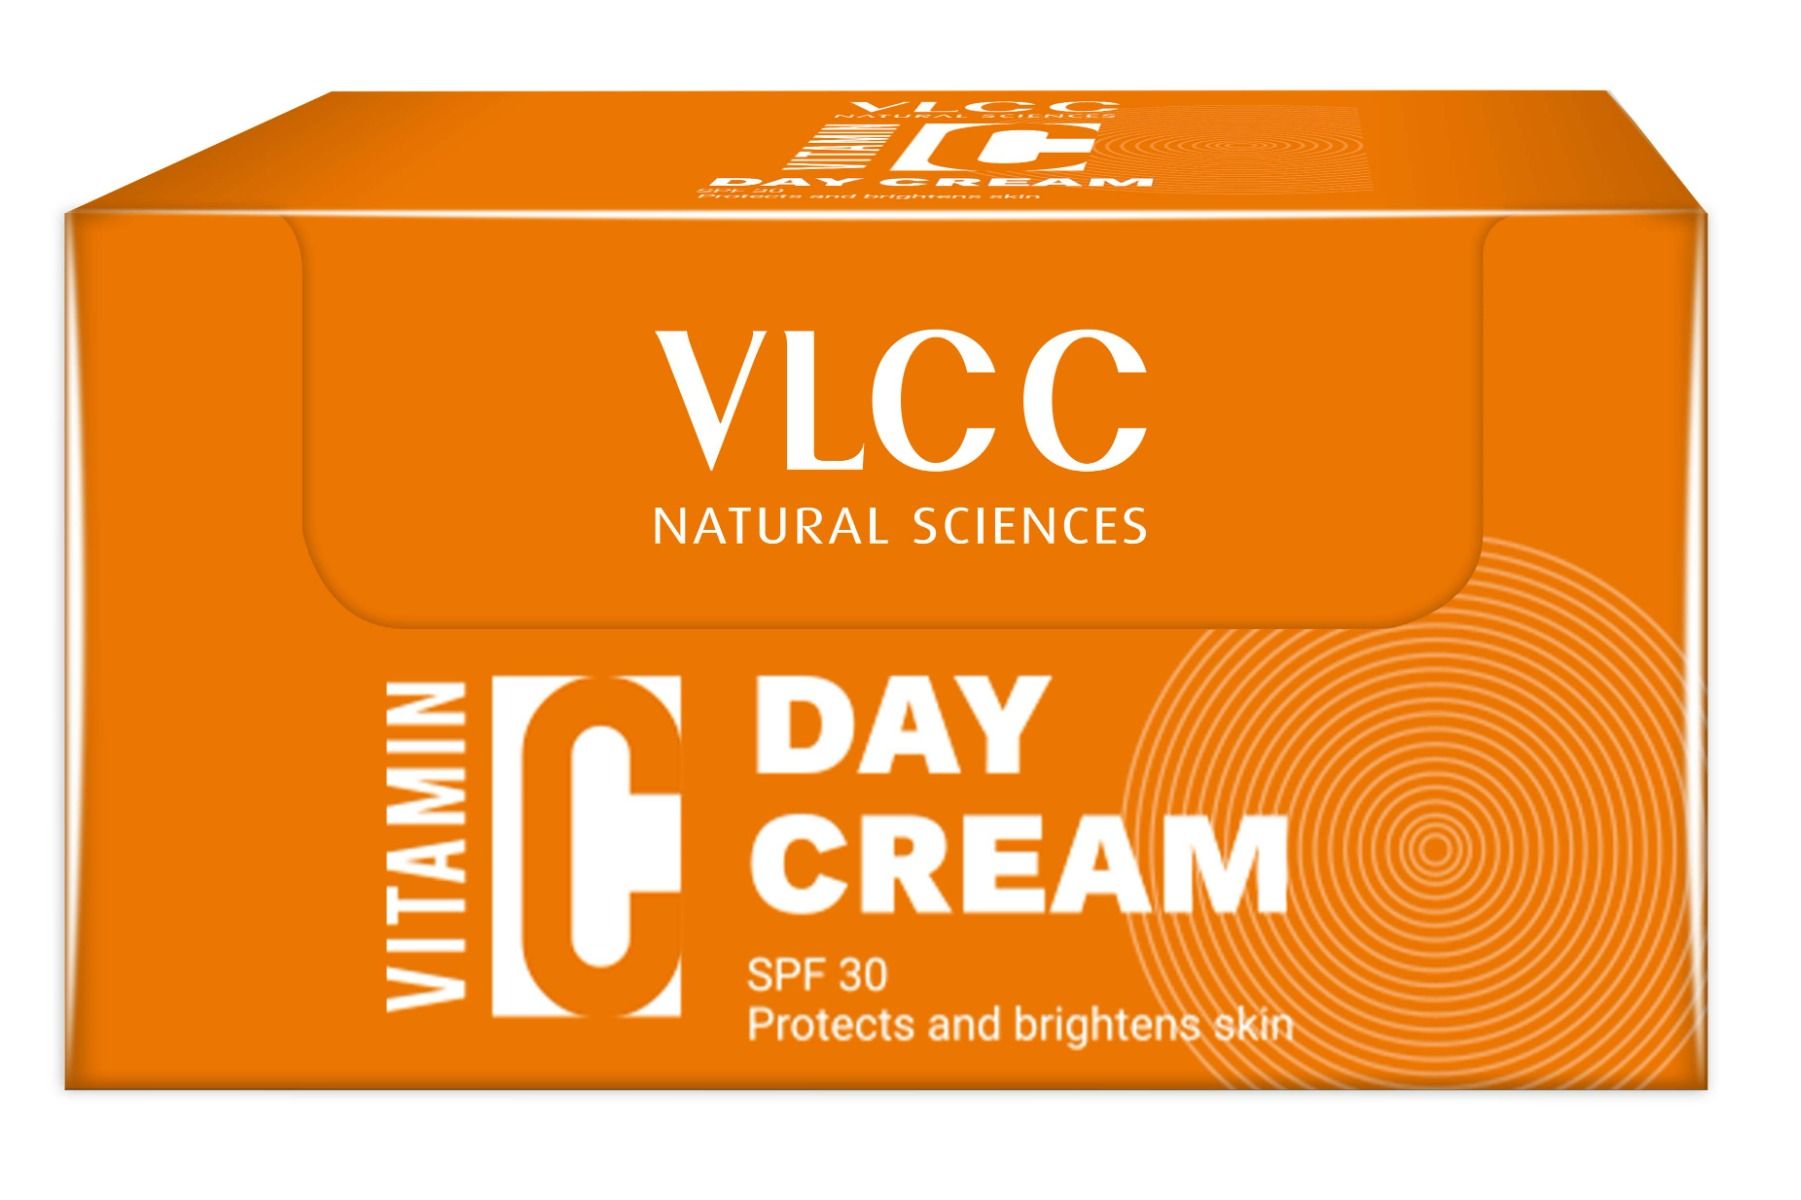 VLCC Vitamin C SPF 30 Day Cream, 50 gm, Pack of 1 